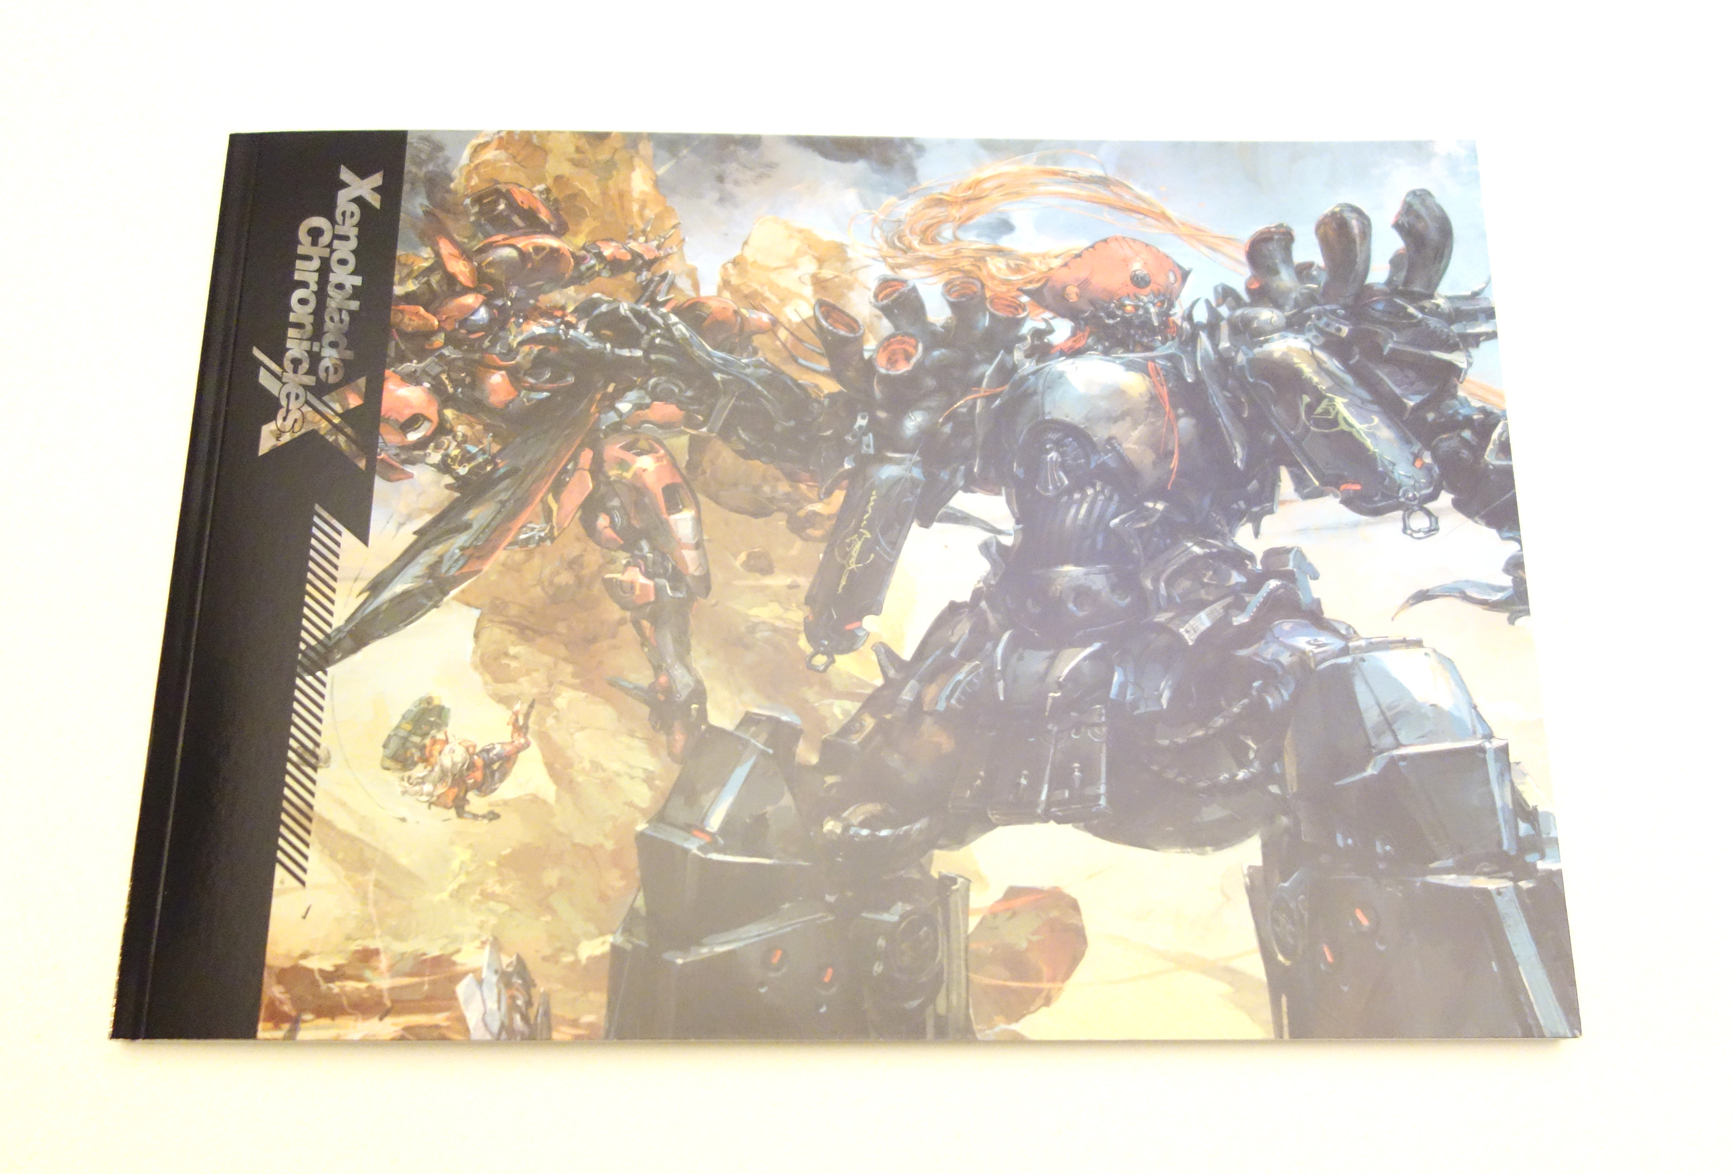 Xenoblade Chronicles X Special Edition art book cover